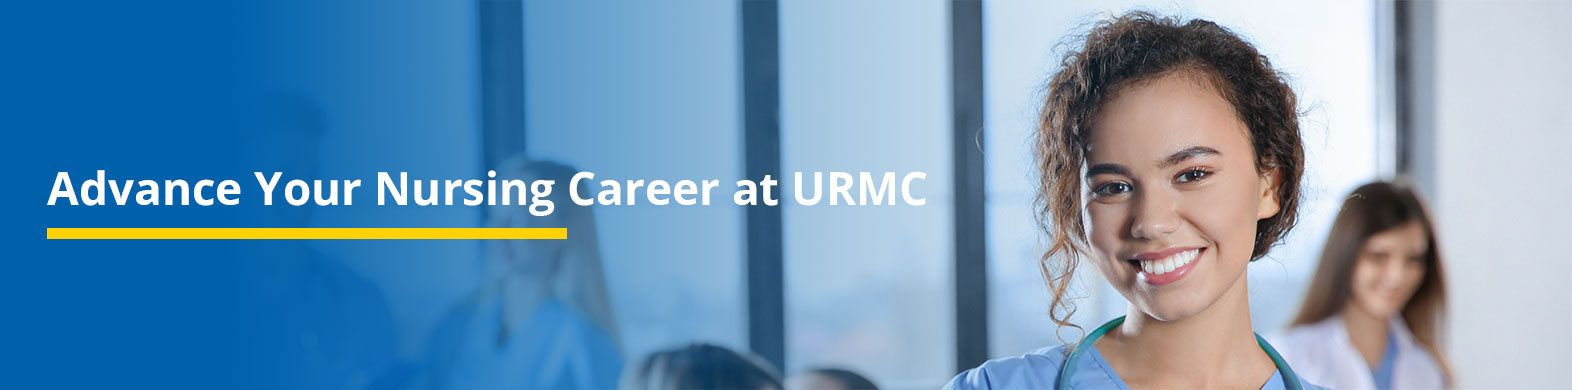 Advance Your Nursing Career at URMC